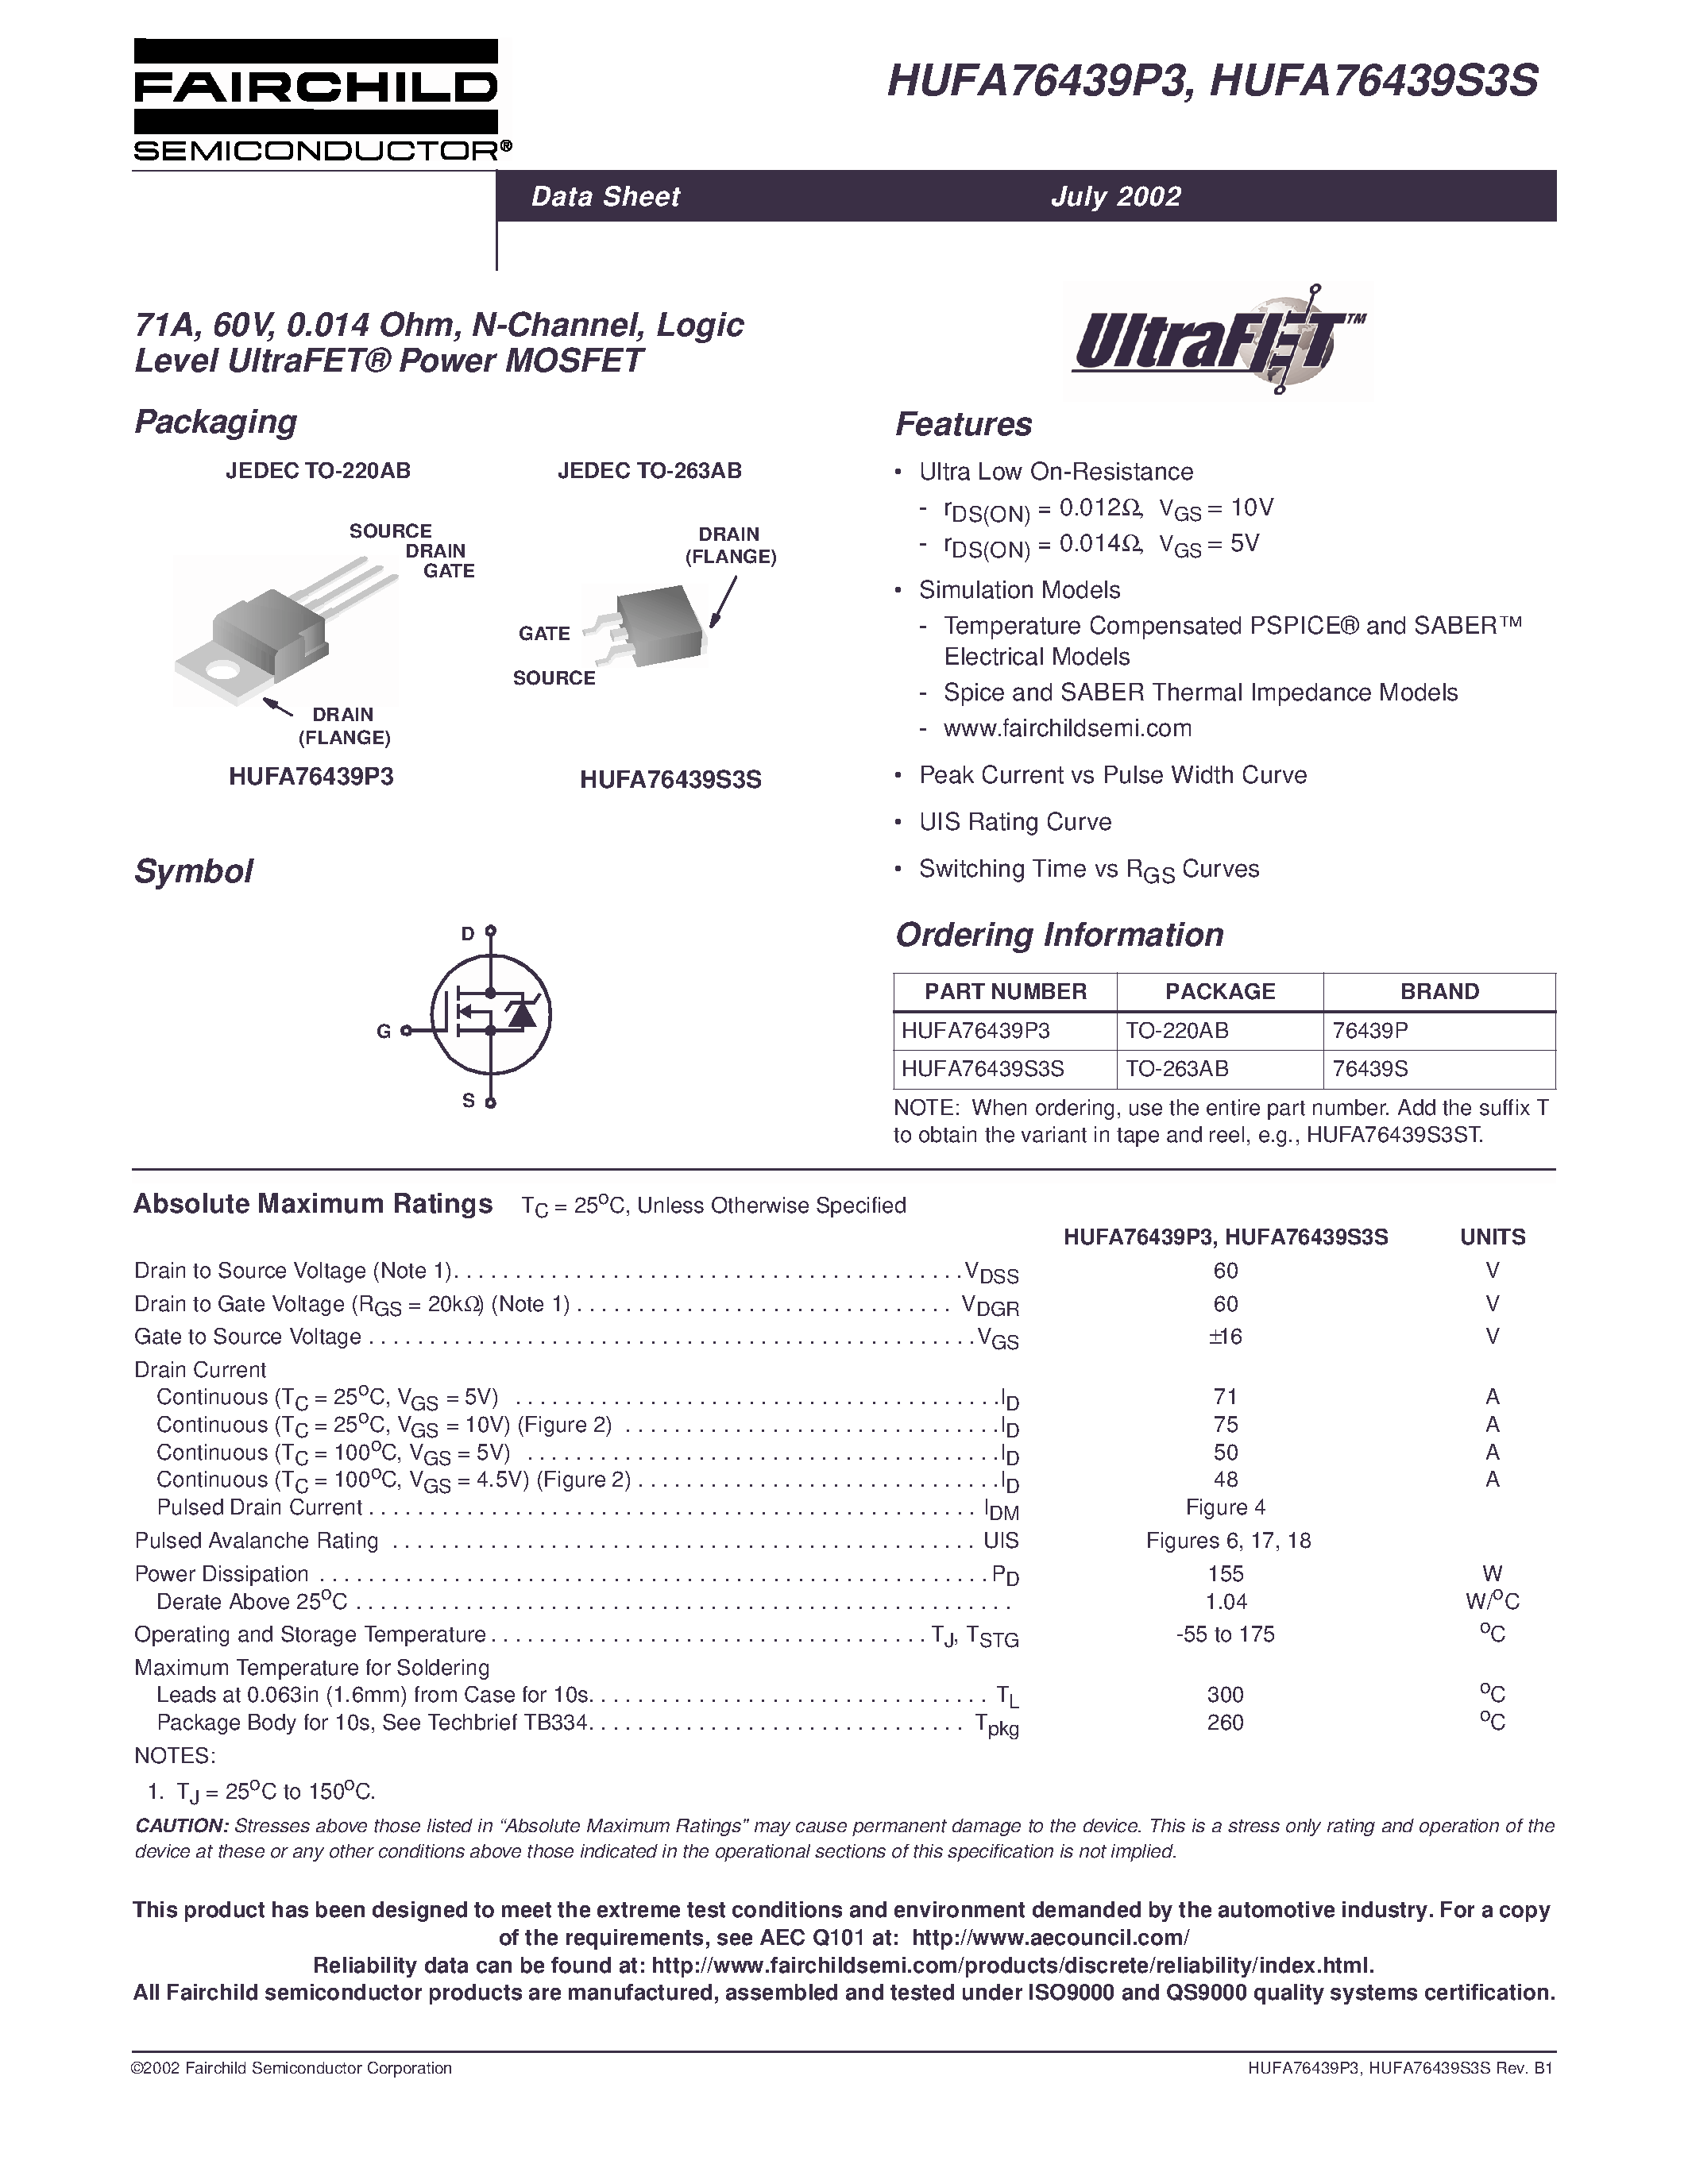 Даташит HUFA76439S3S - 71A/ 60V/ 0.014 Ohm/ N-Channel/ Logic Level UltraFET Power MOSFET страница 1